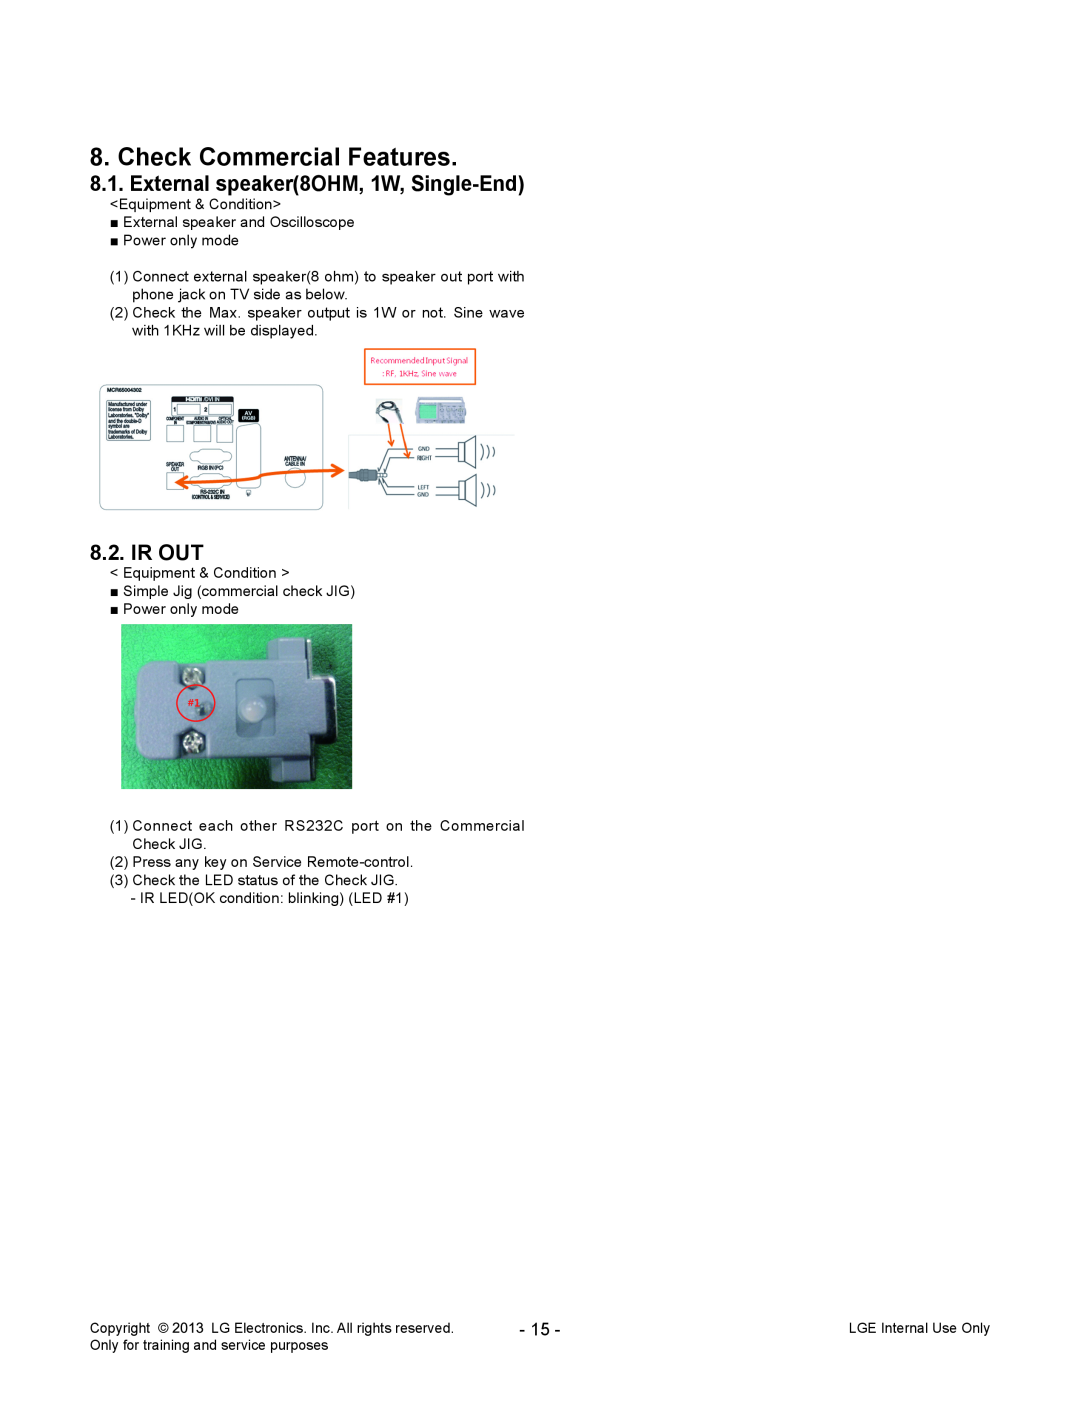 LG Electronics 55LA625C-ZA service manual Check Commercial Features, External speaker8OHM, 1W, Single-End, Ir Out 